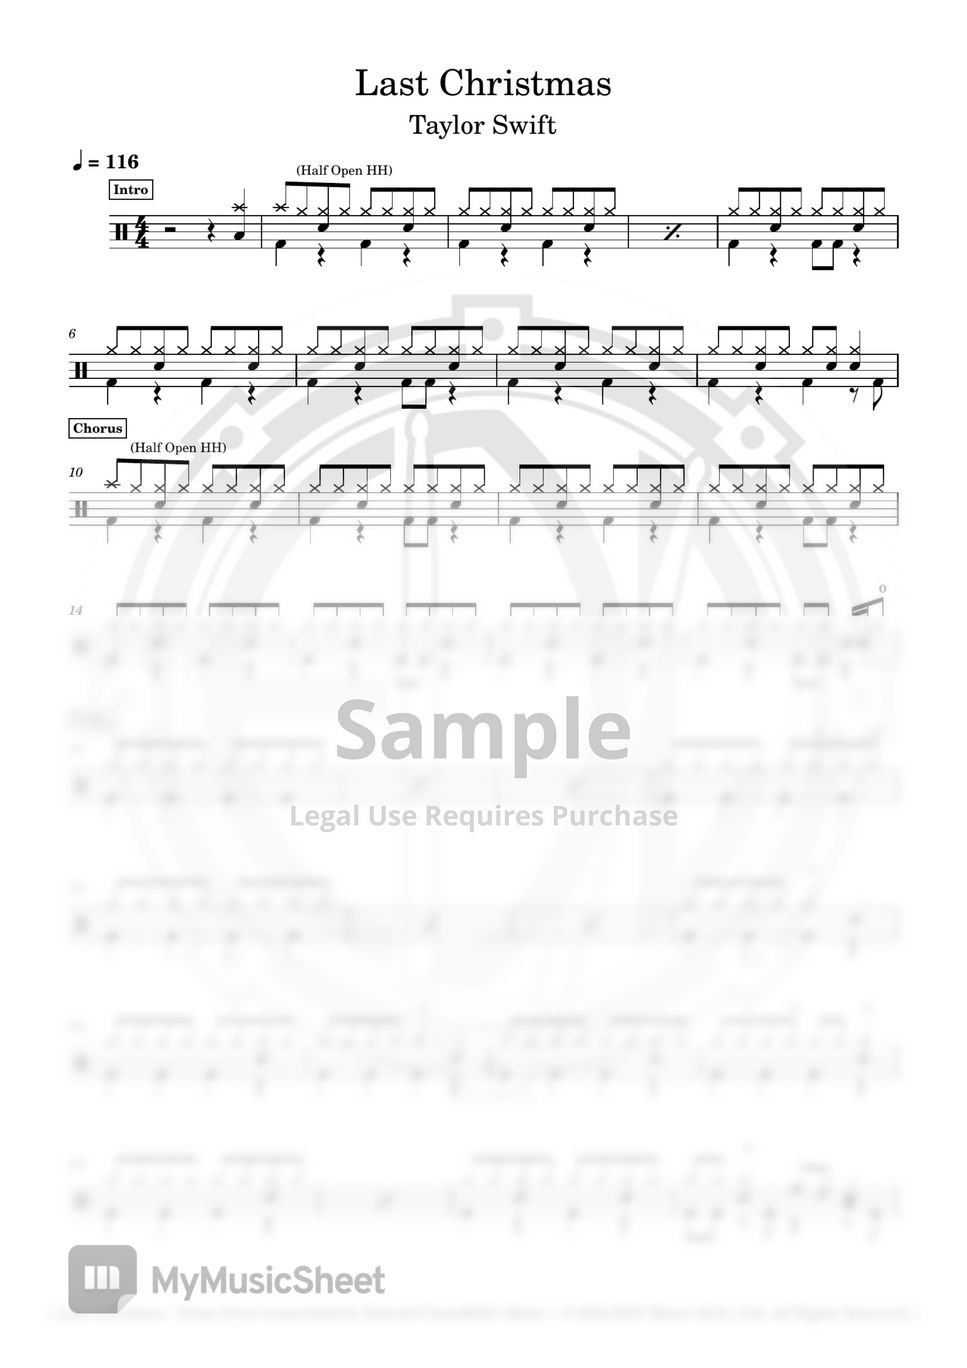 Taylor Swift - Last Christmas (Drum Score) by Edward Chan@EDC Music